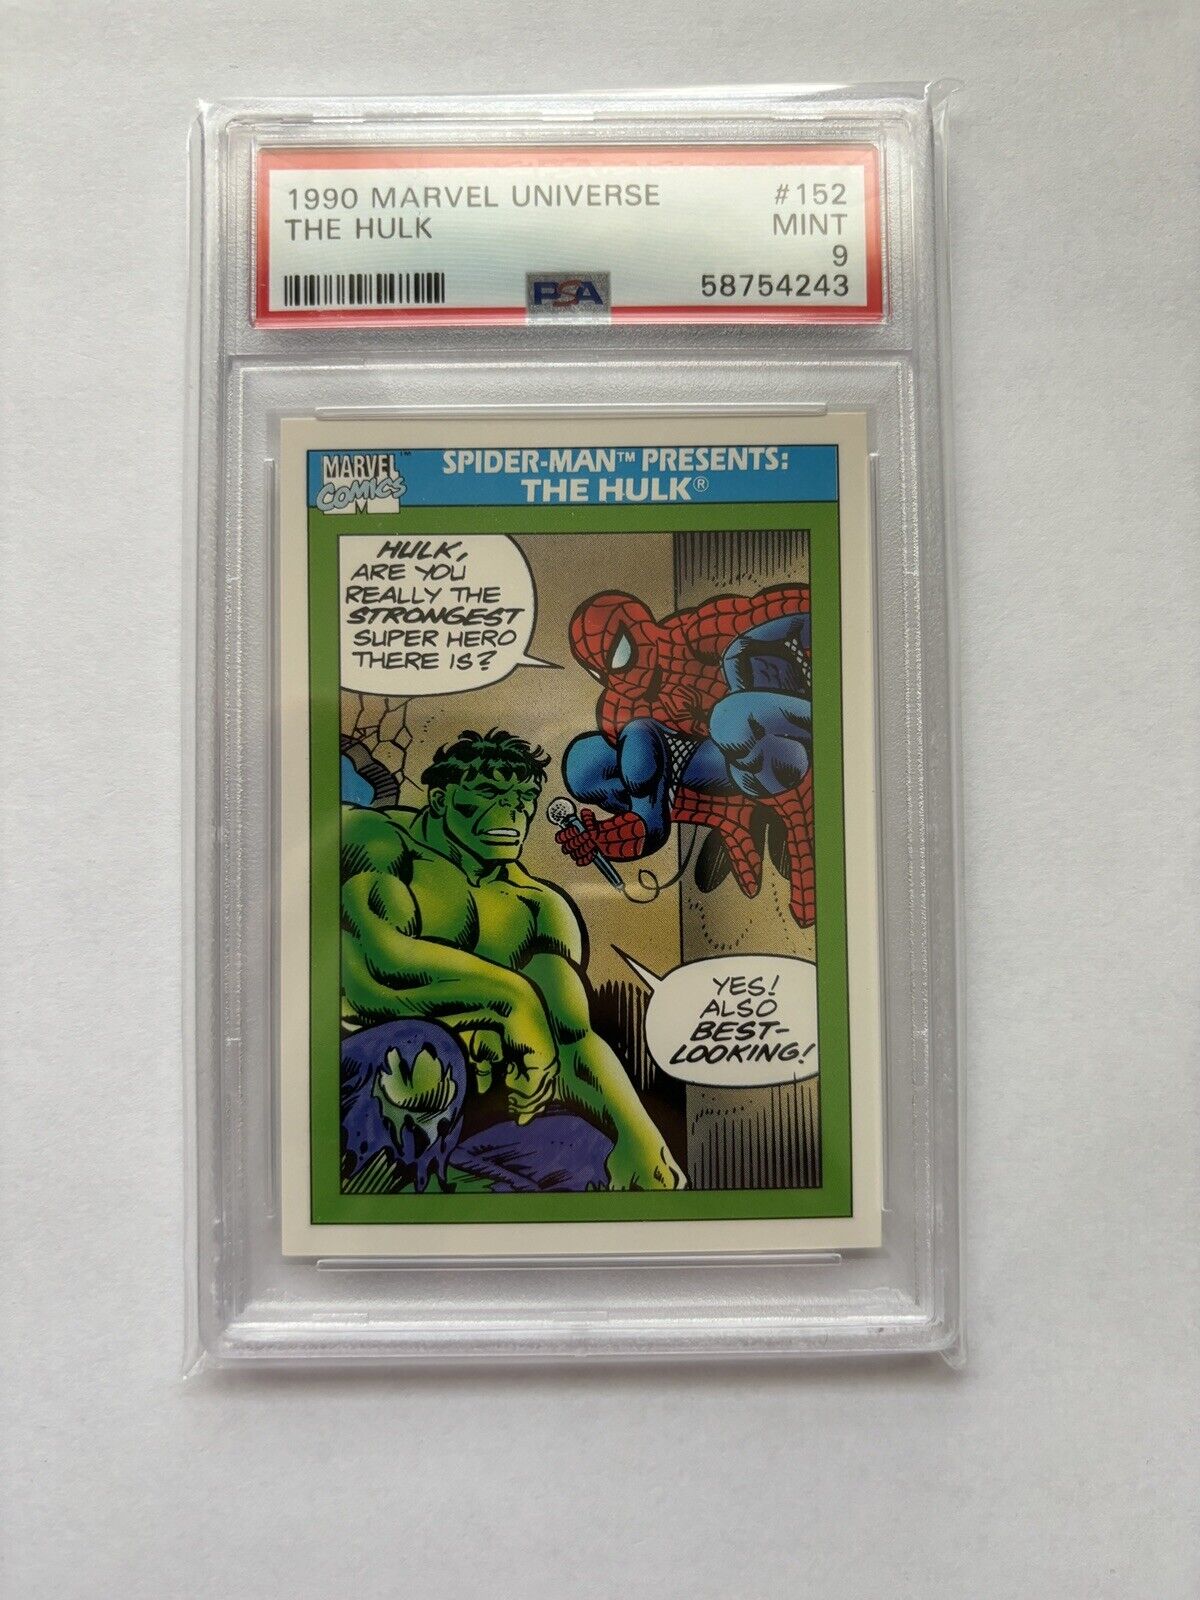 1990 Marvel Universe The Hulk #152 PSA 9 Mint MCU Avengers Spiderman Comic